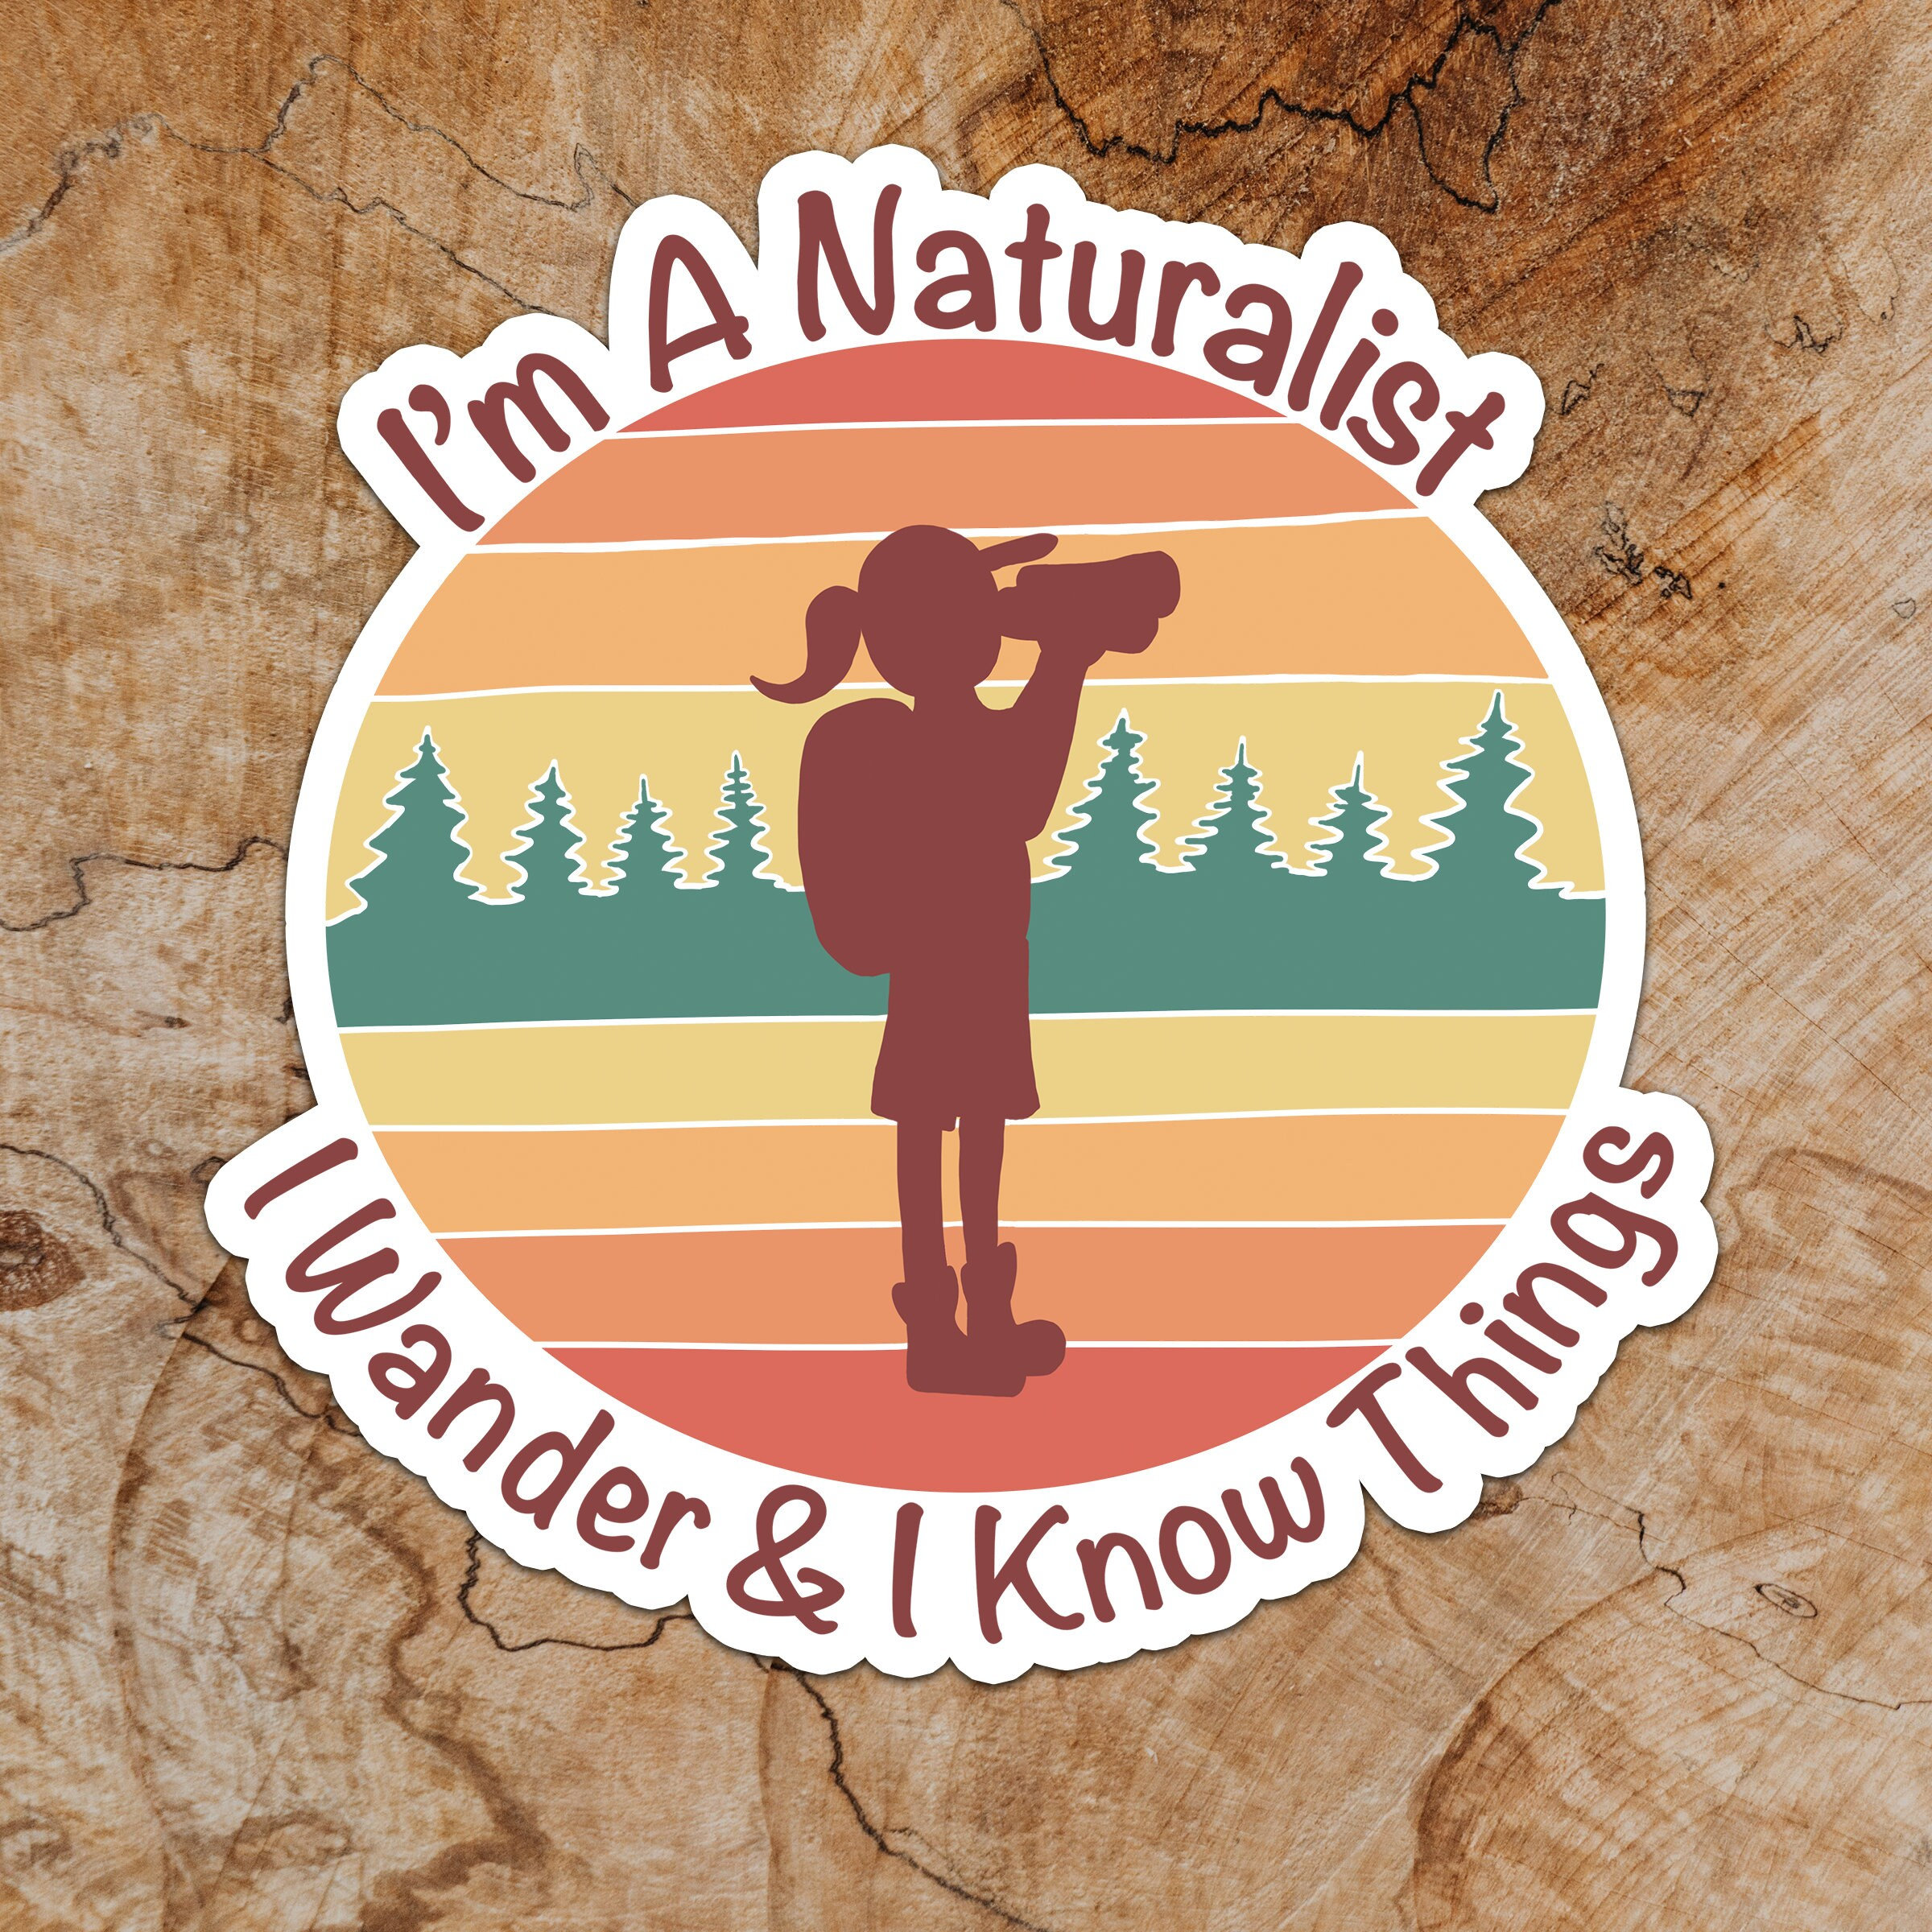 naturist videos amateur free samples